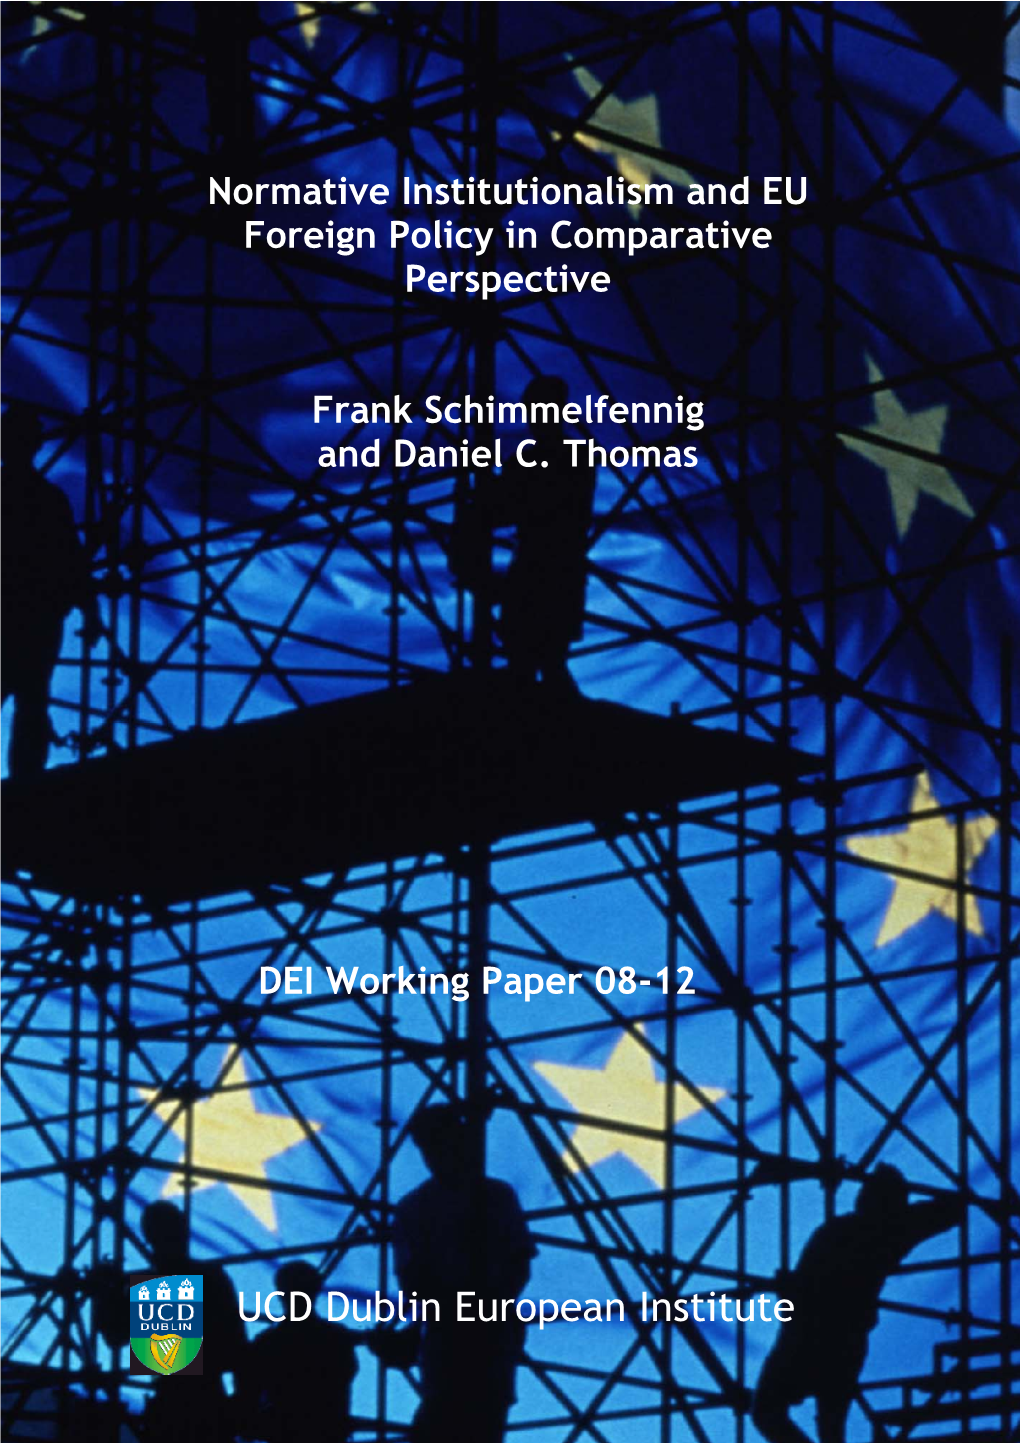 UCD Dublin European Institute Working Paper: © Frank Schimmelfennig and Daniel C